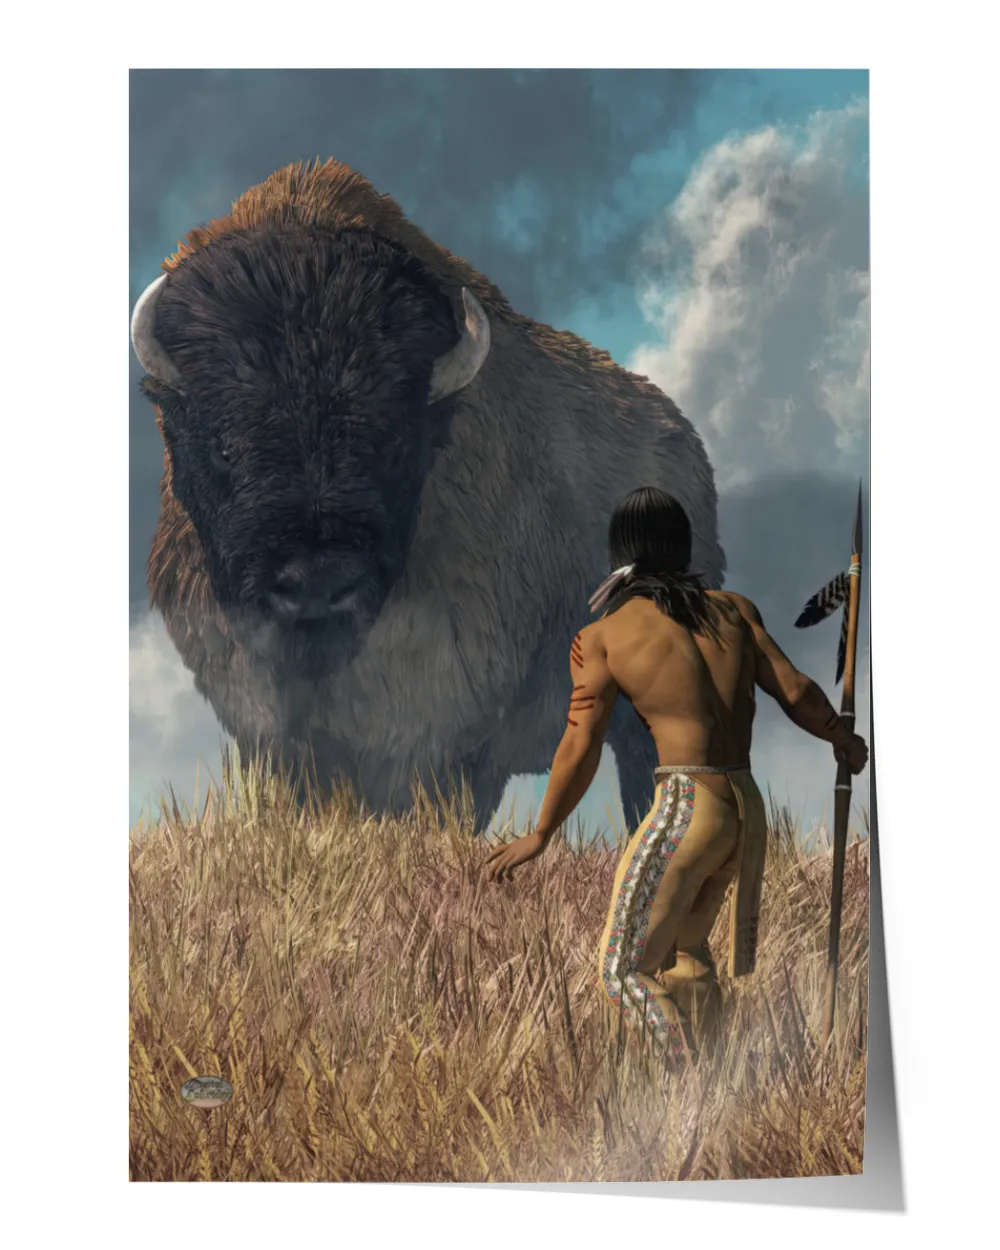 naa-jlv-26 The Hunter and the Buffalo by Deskridge